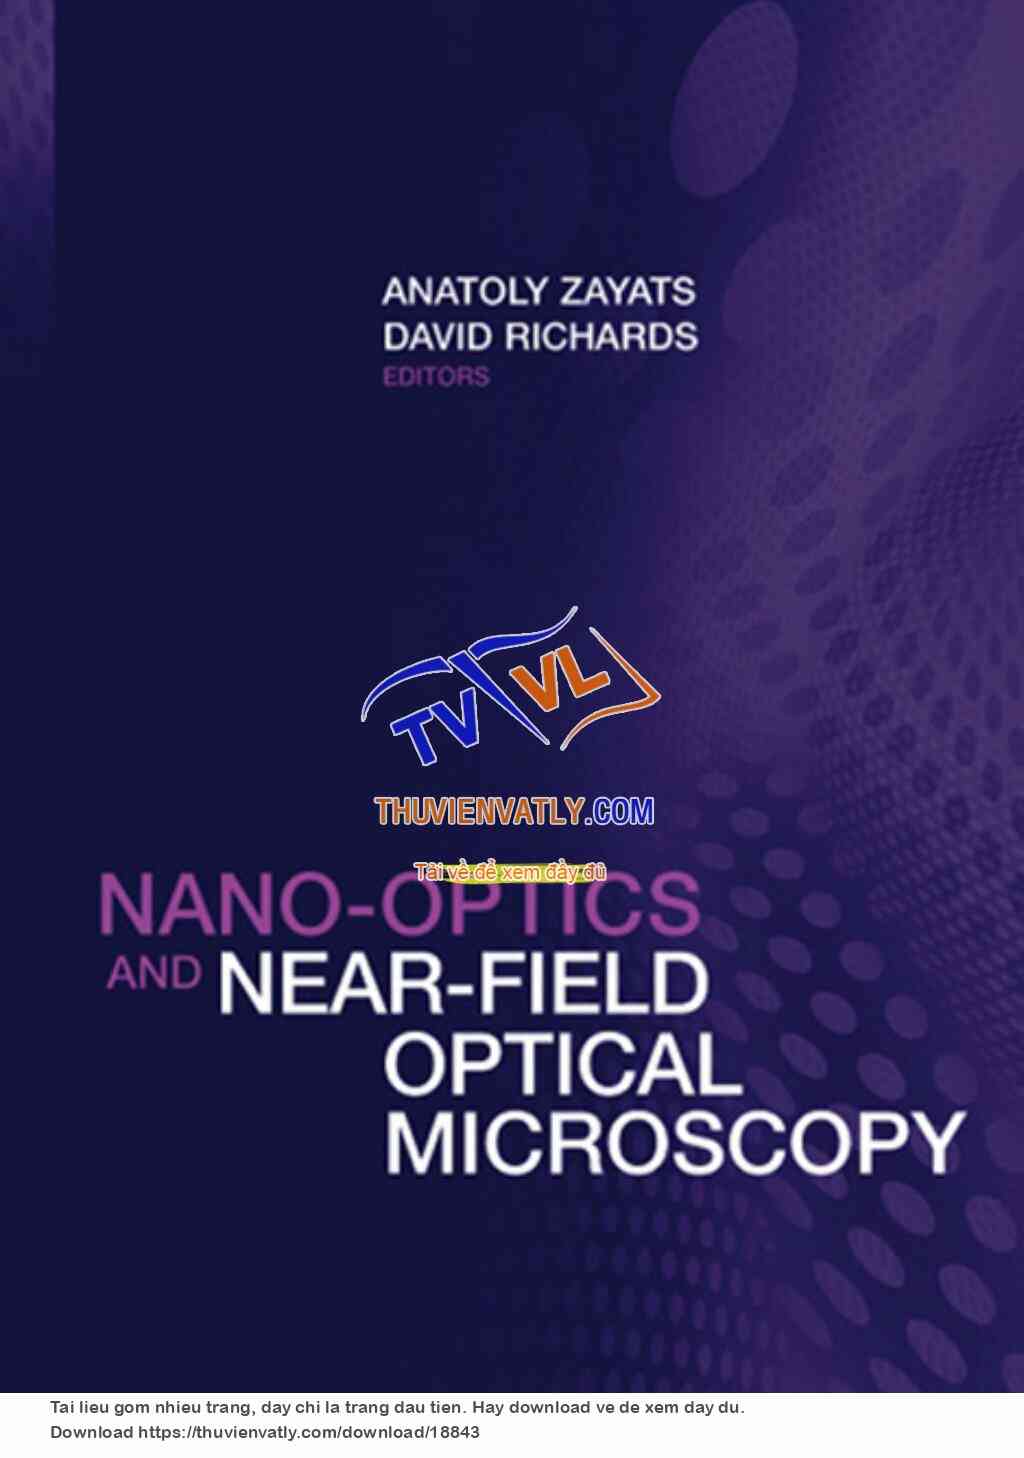 Nano-Optics and Near-Field Optical Microscopy (Anatoly Zayats & David Richards, Artechhouse 2009)